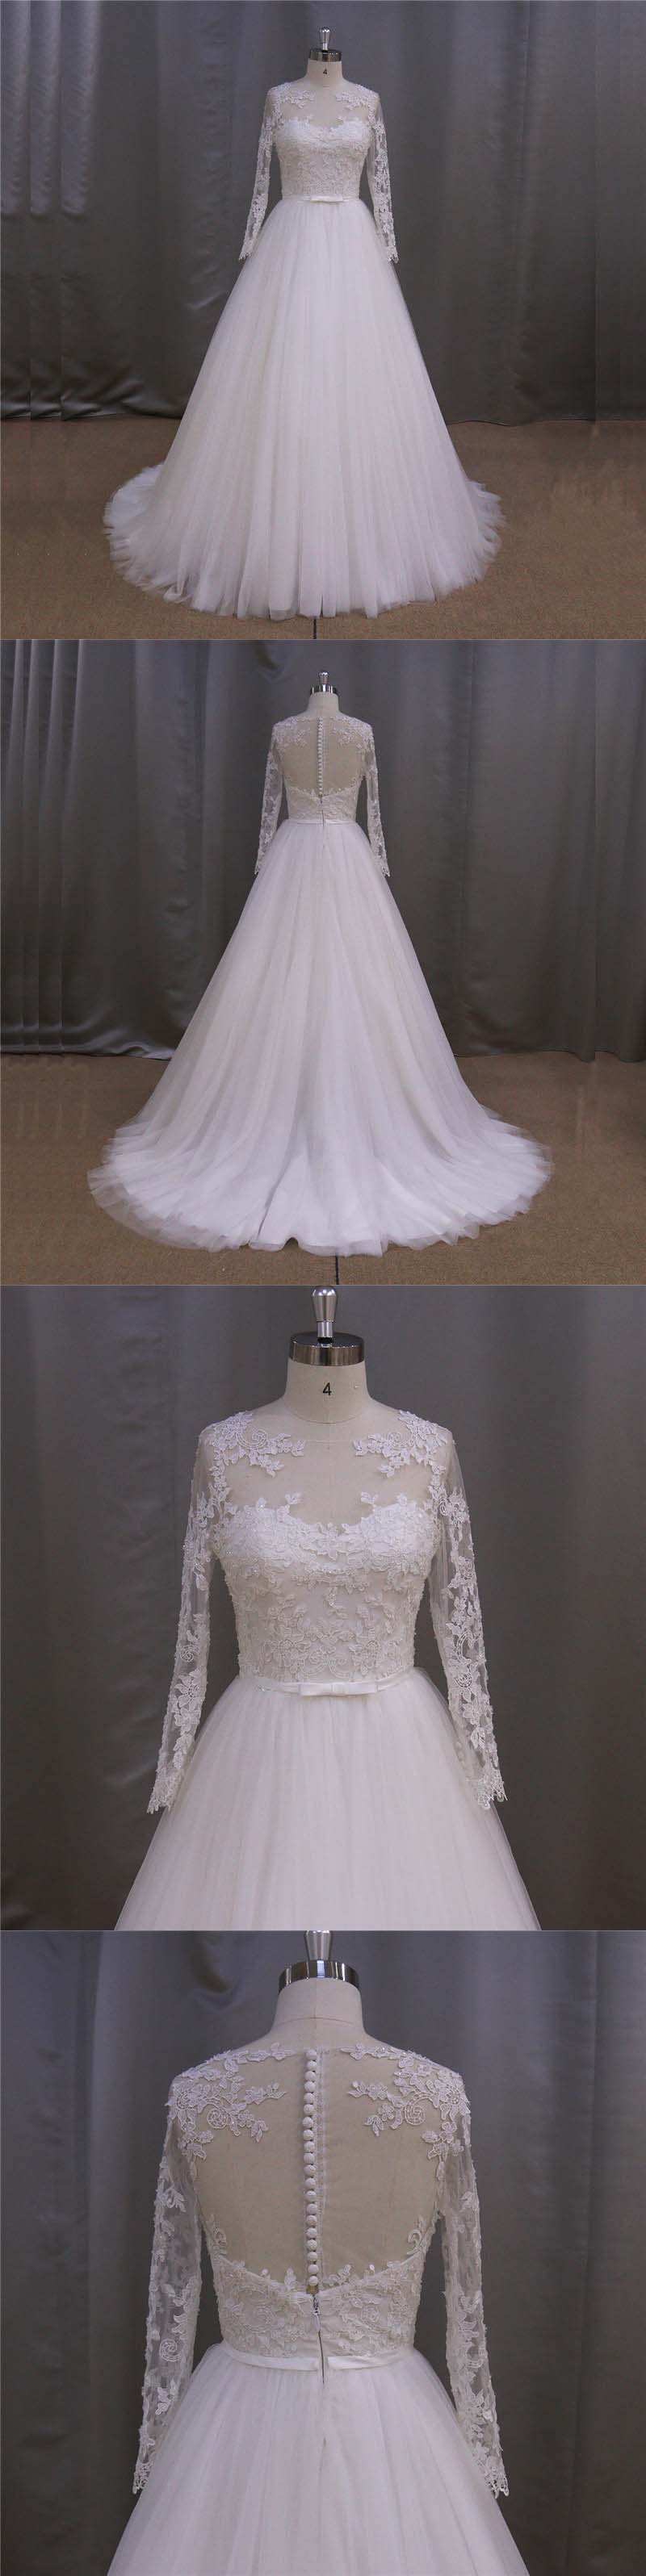 2016 New Long-Sleeve Applique Bridal Dress